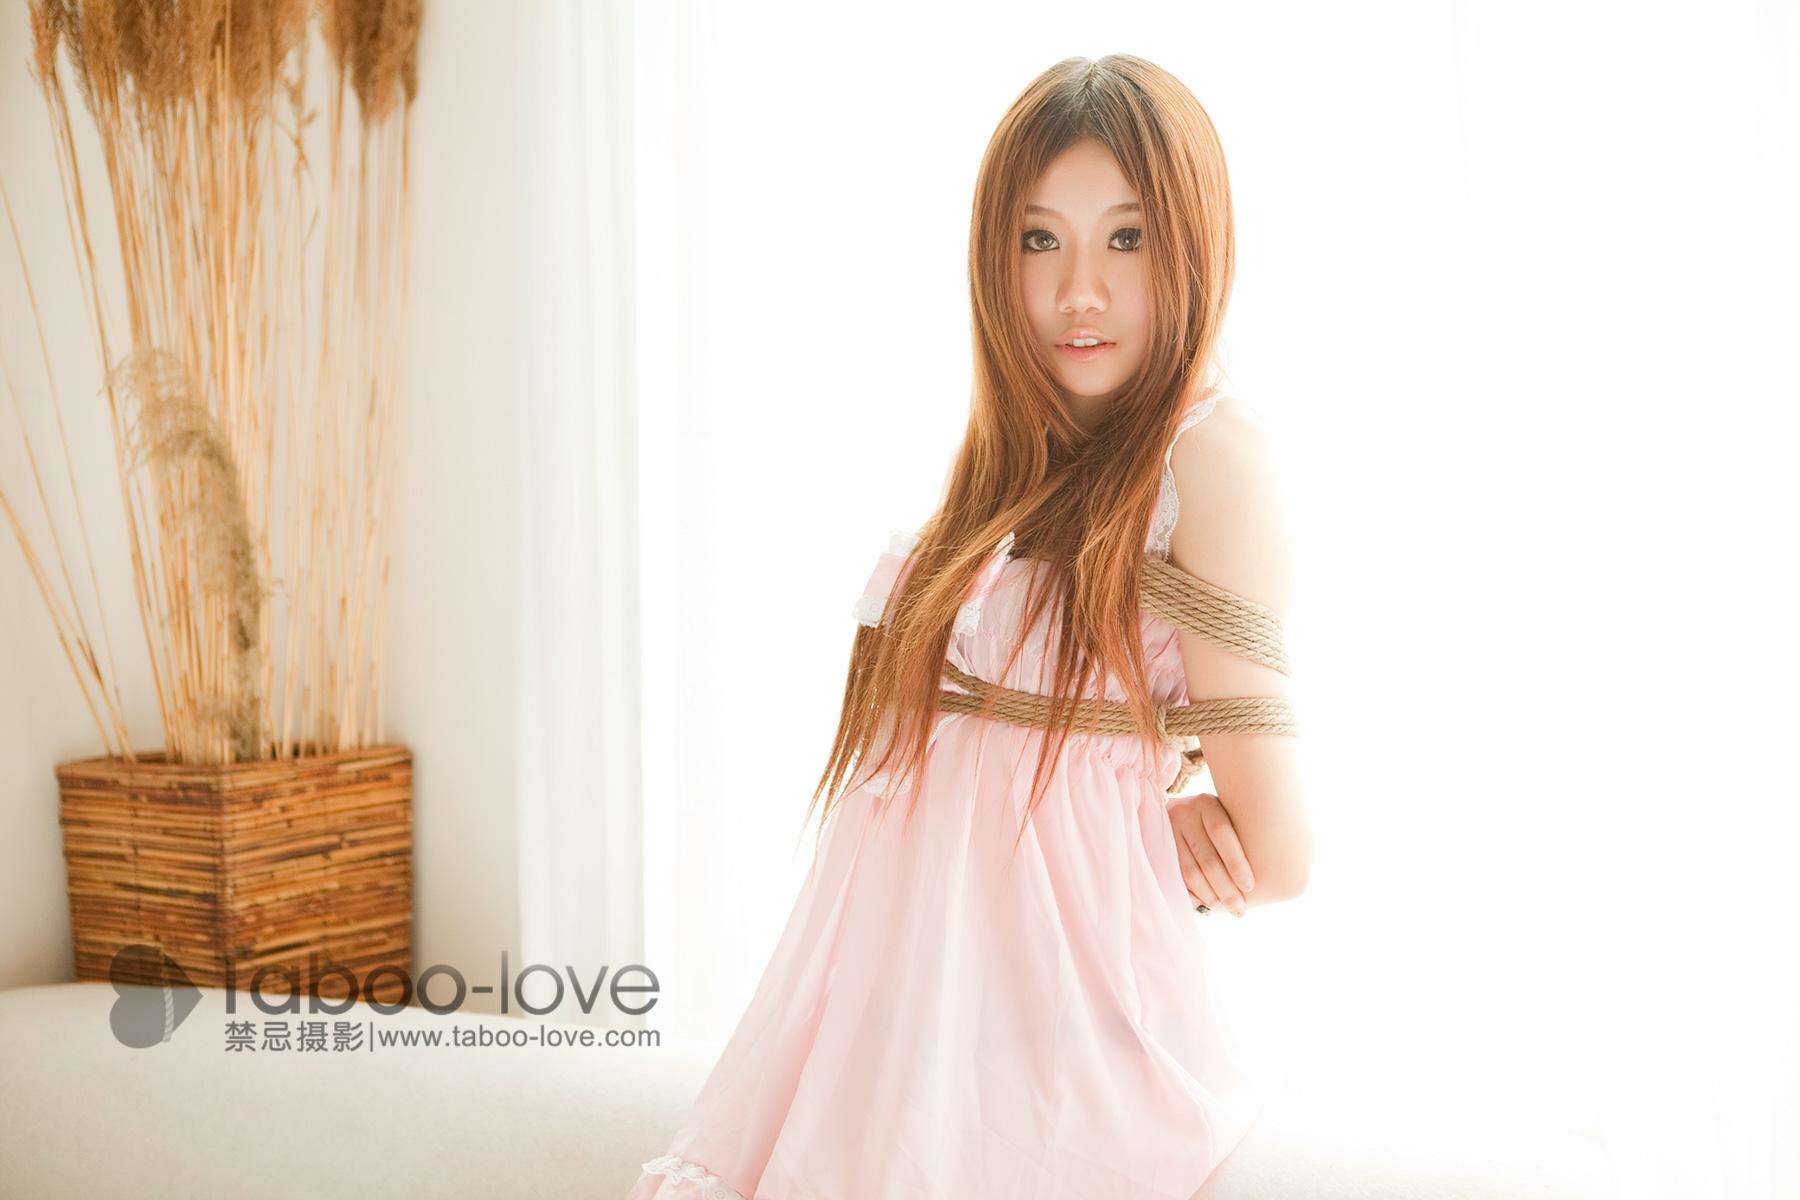 Taboo-love NO.081 Cici 暖洋洋的粉色纯美 禁忌攝影繩藝 - 4.jpg